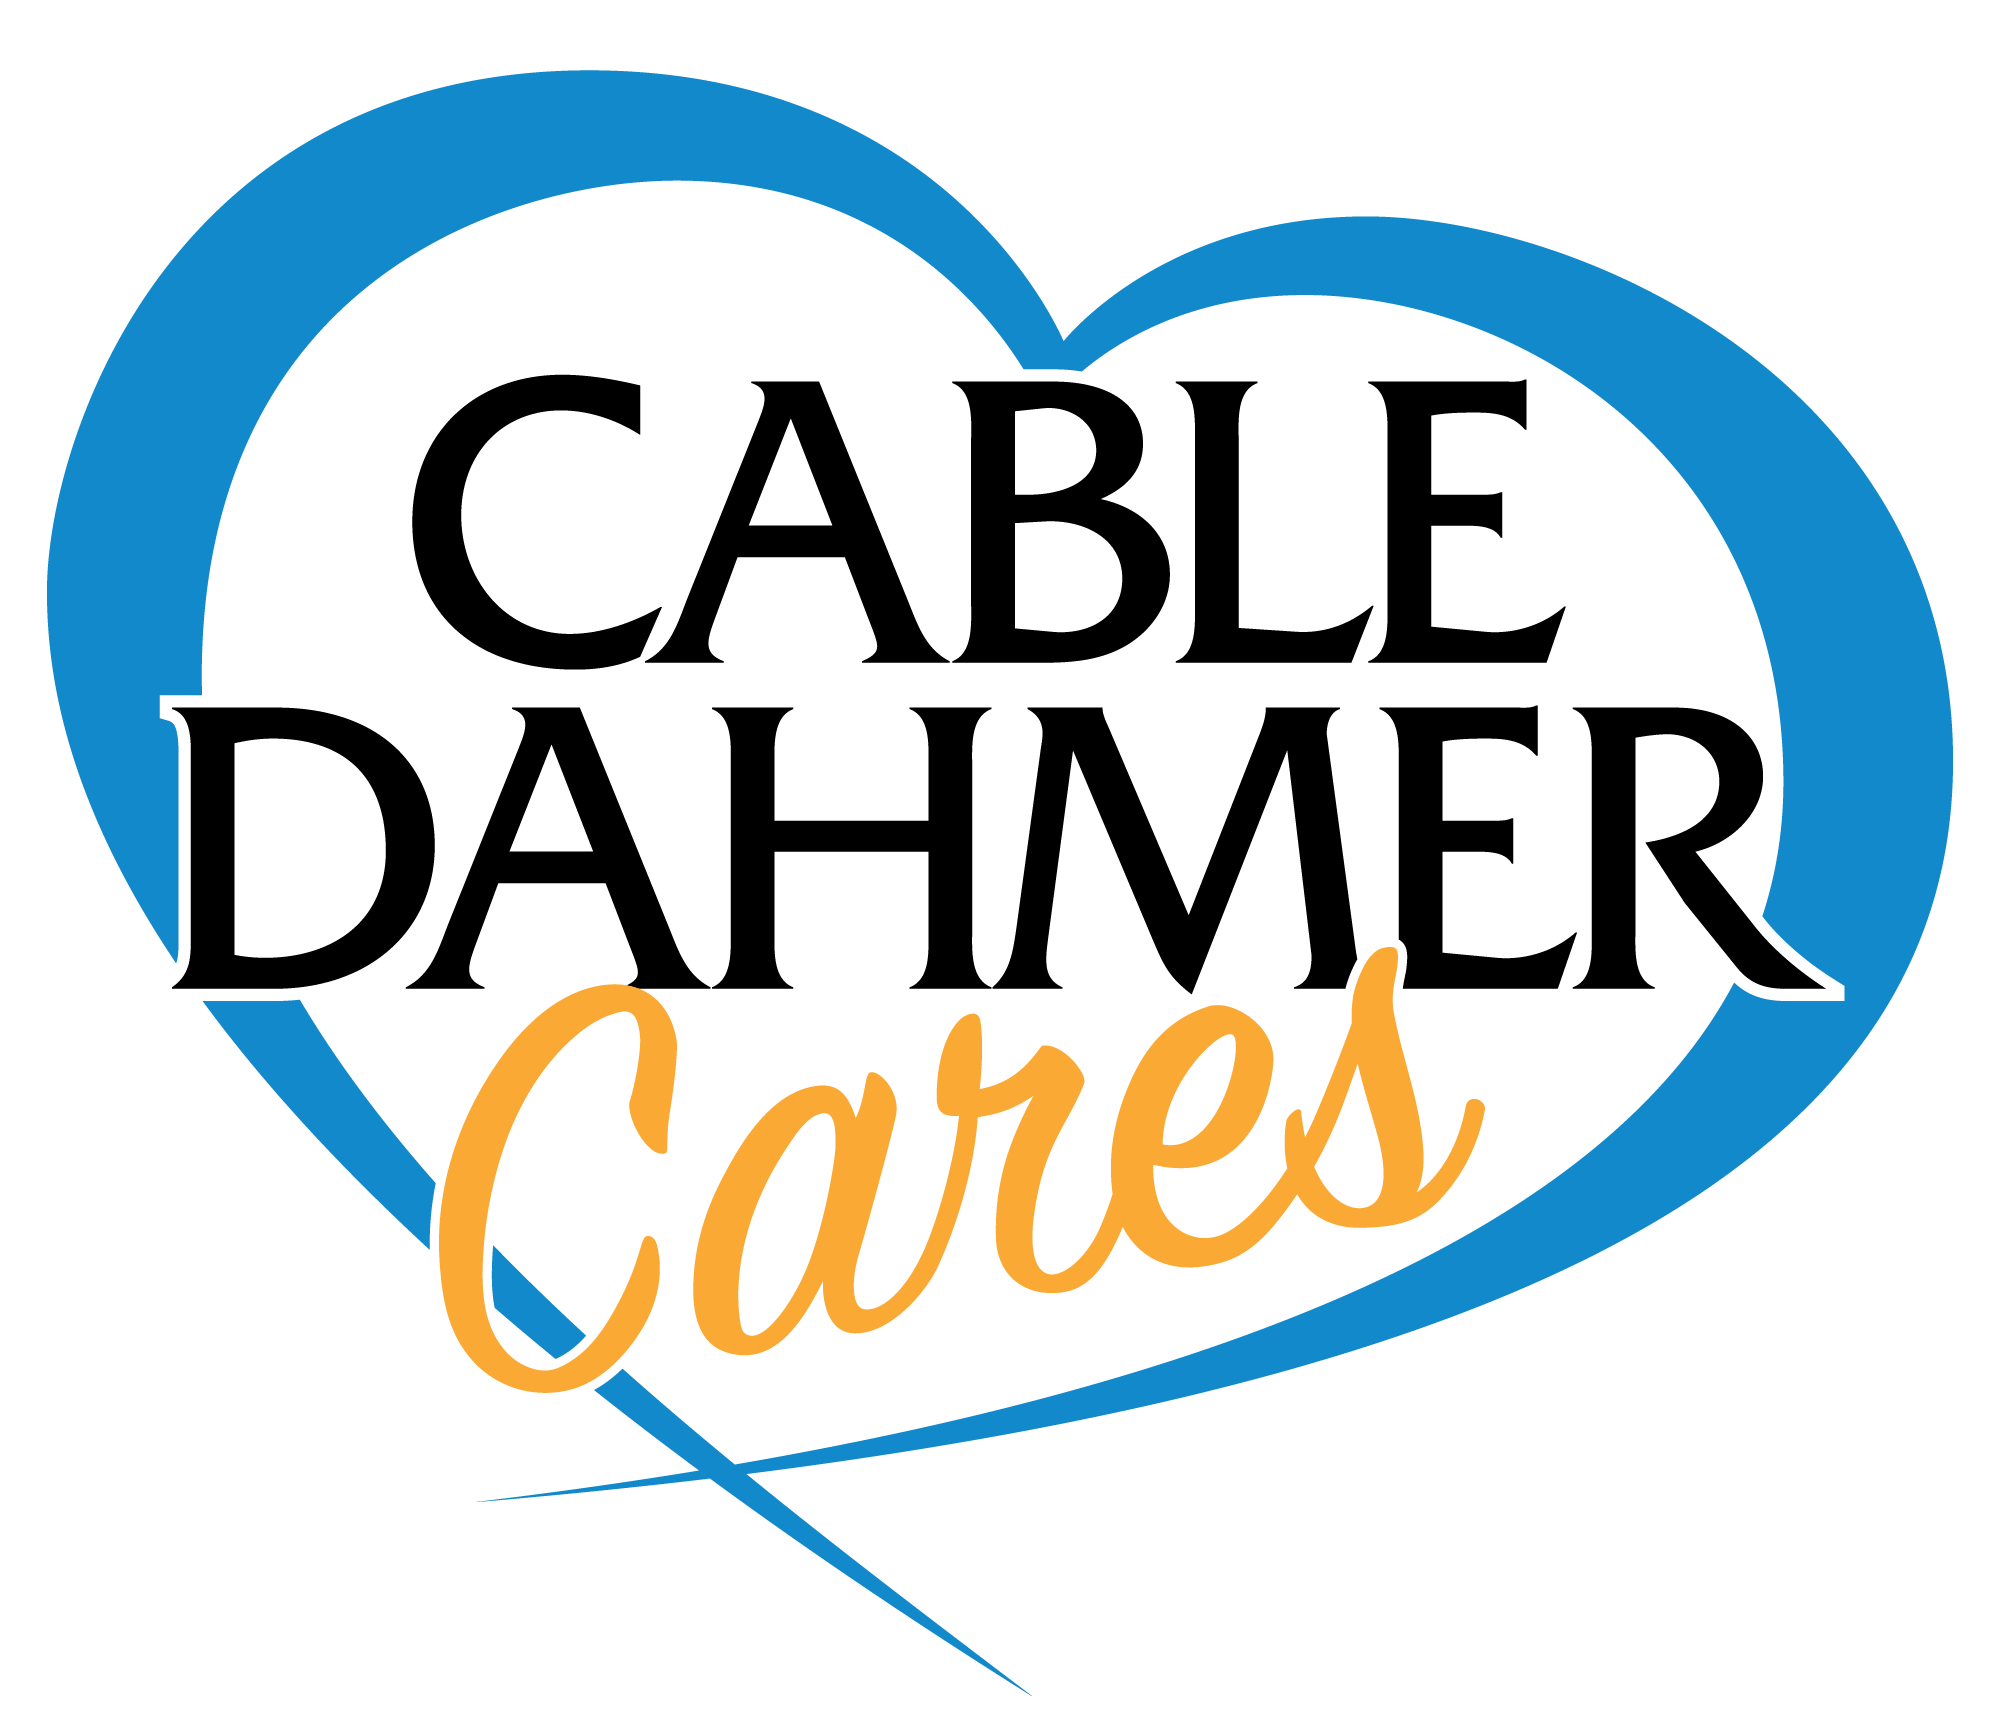 Cable Dahmer Cares logo